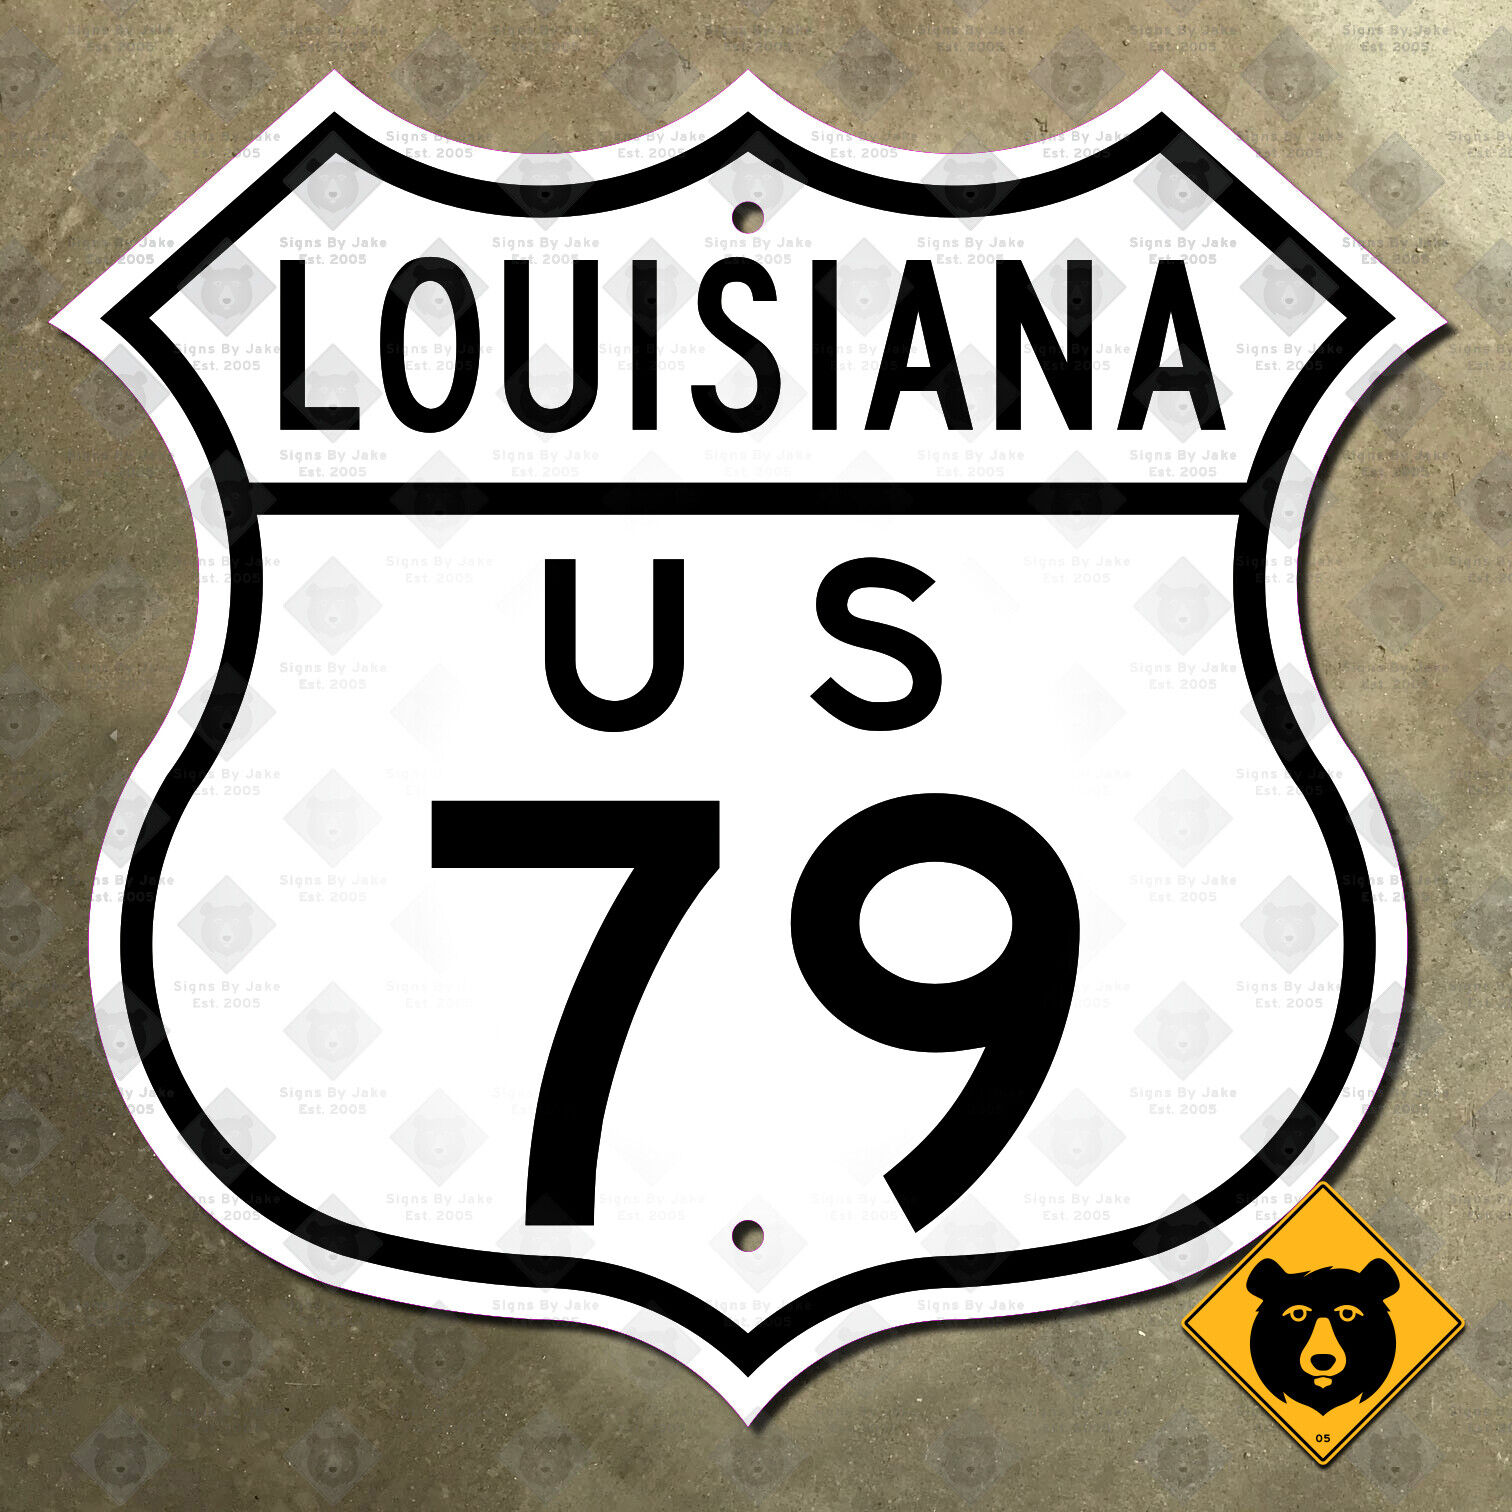 Louisiana US Route 79 highway marker road sign Shreveport Bossier City 16x16